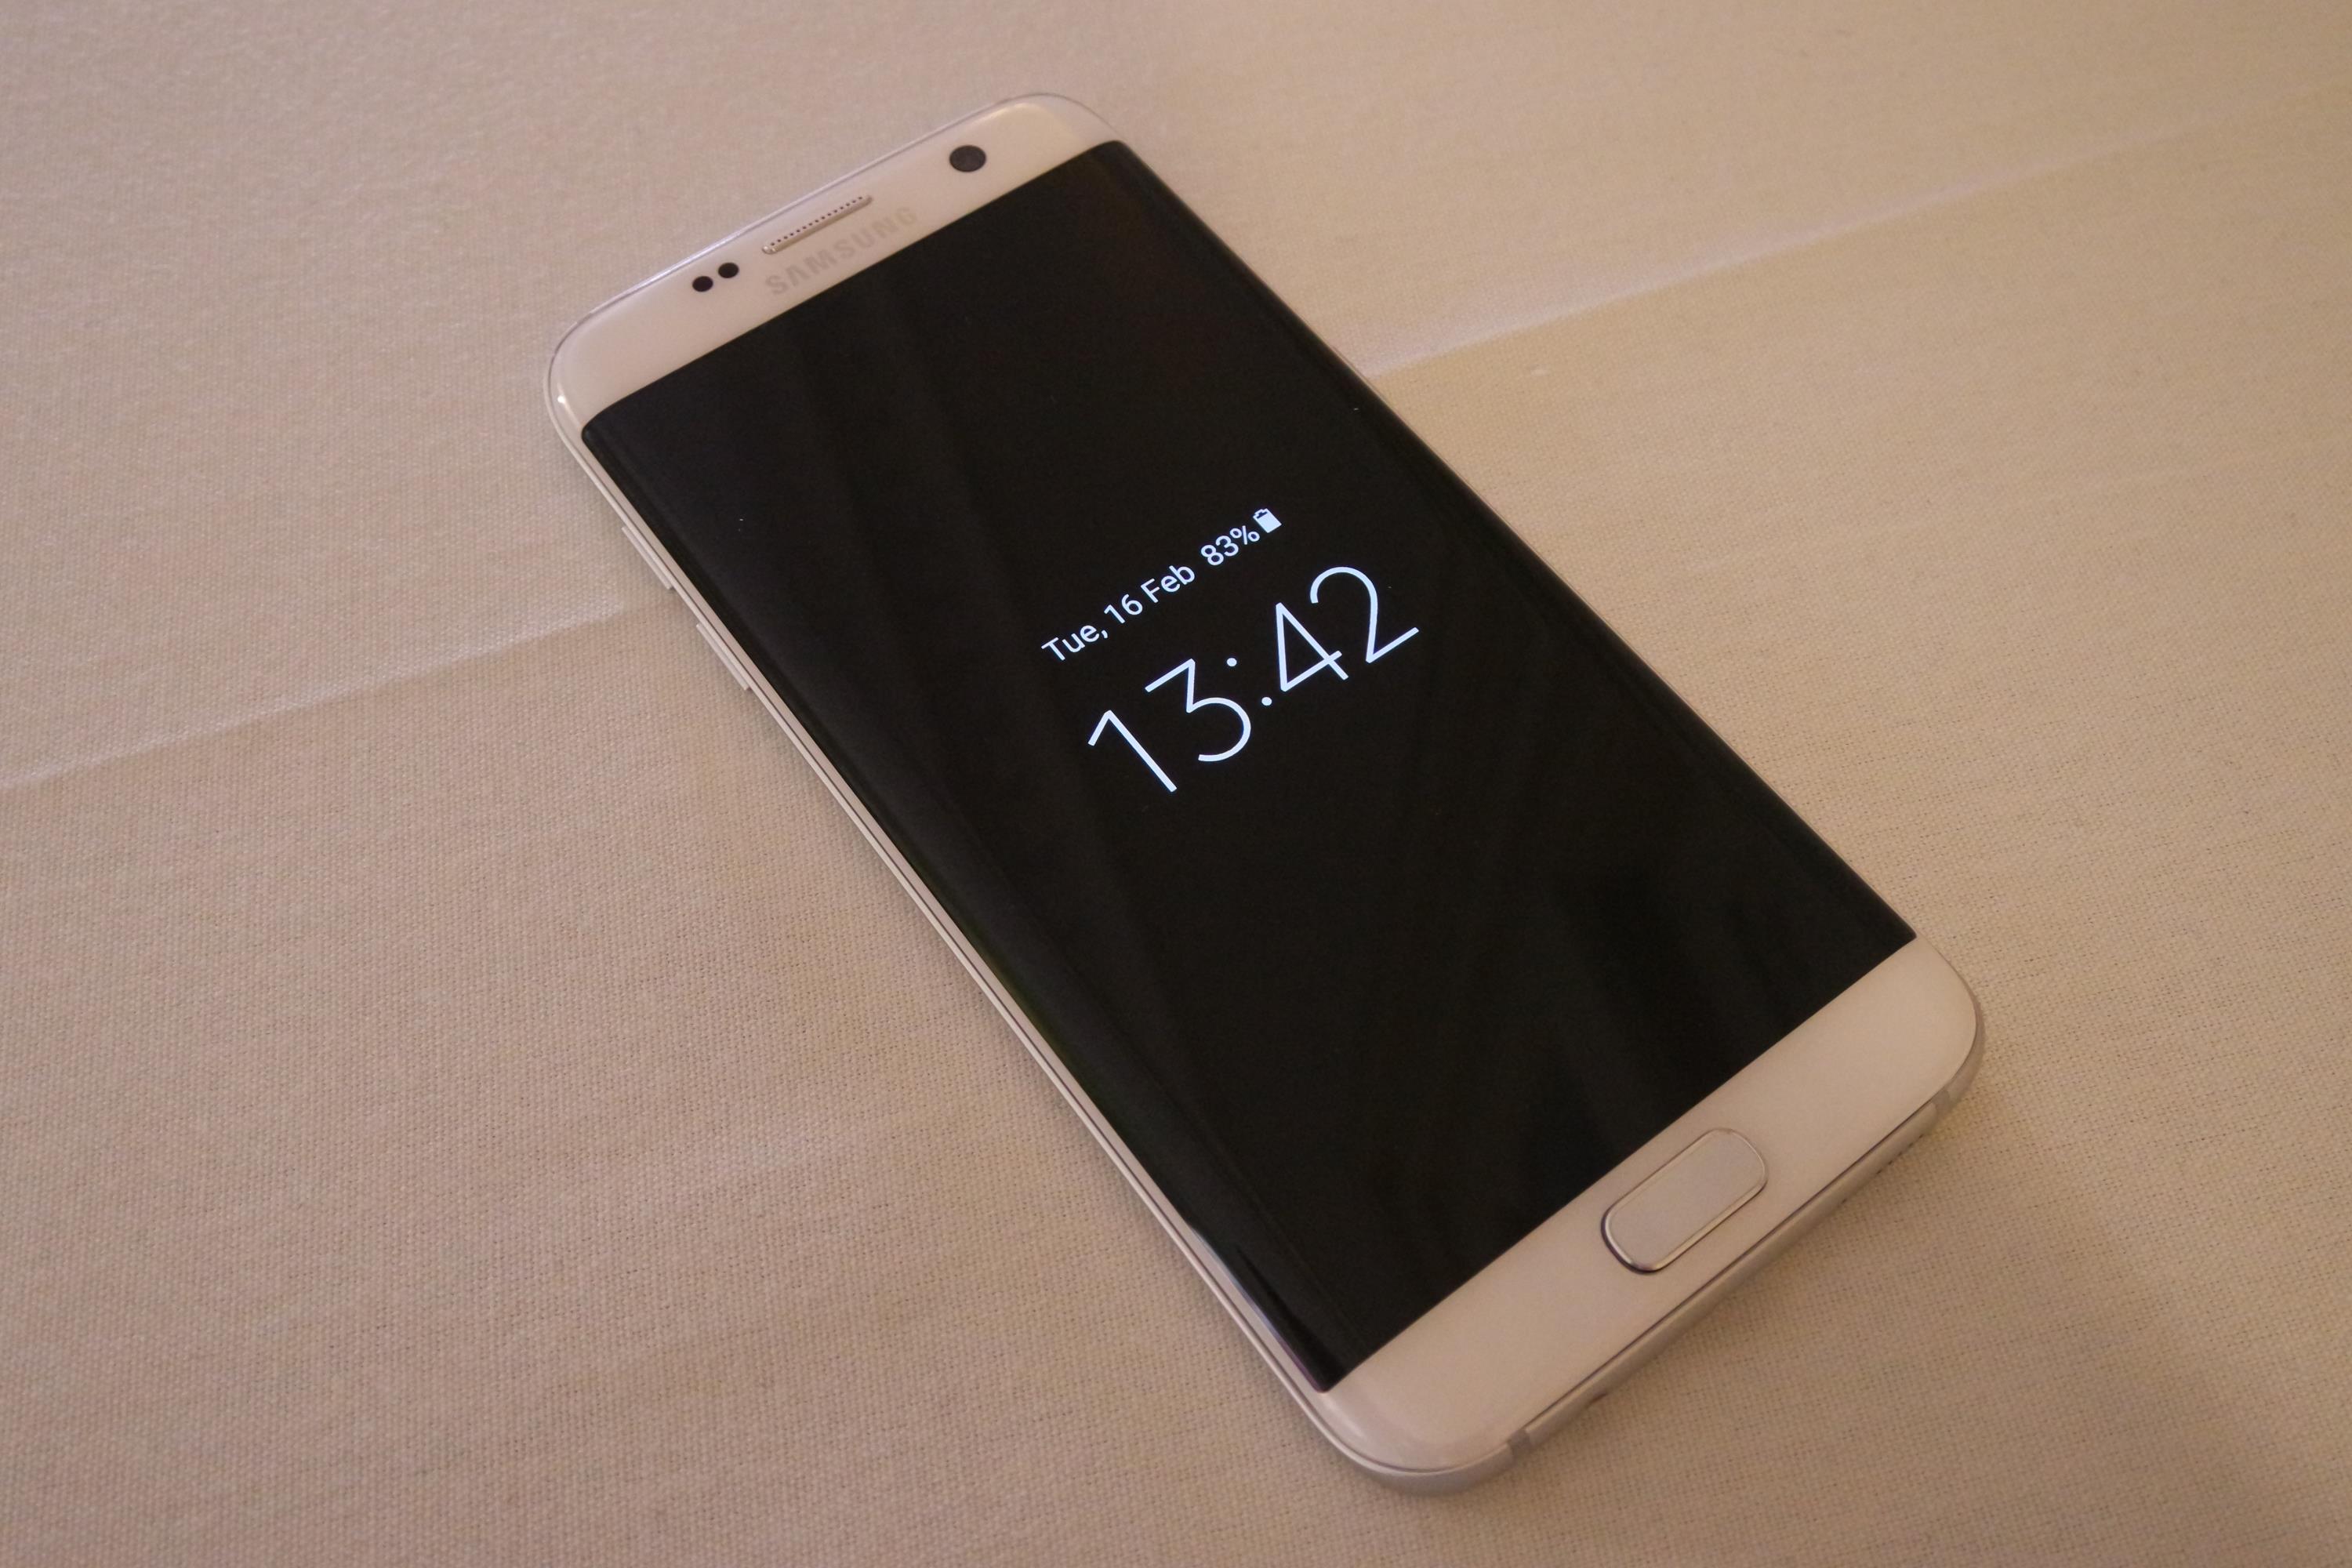 Samsung Galaxy S7 ja S7 edge